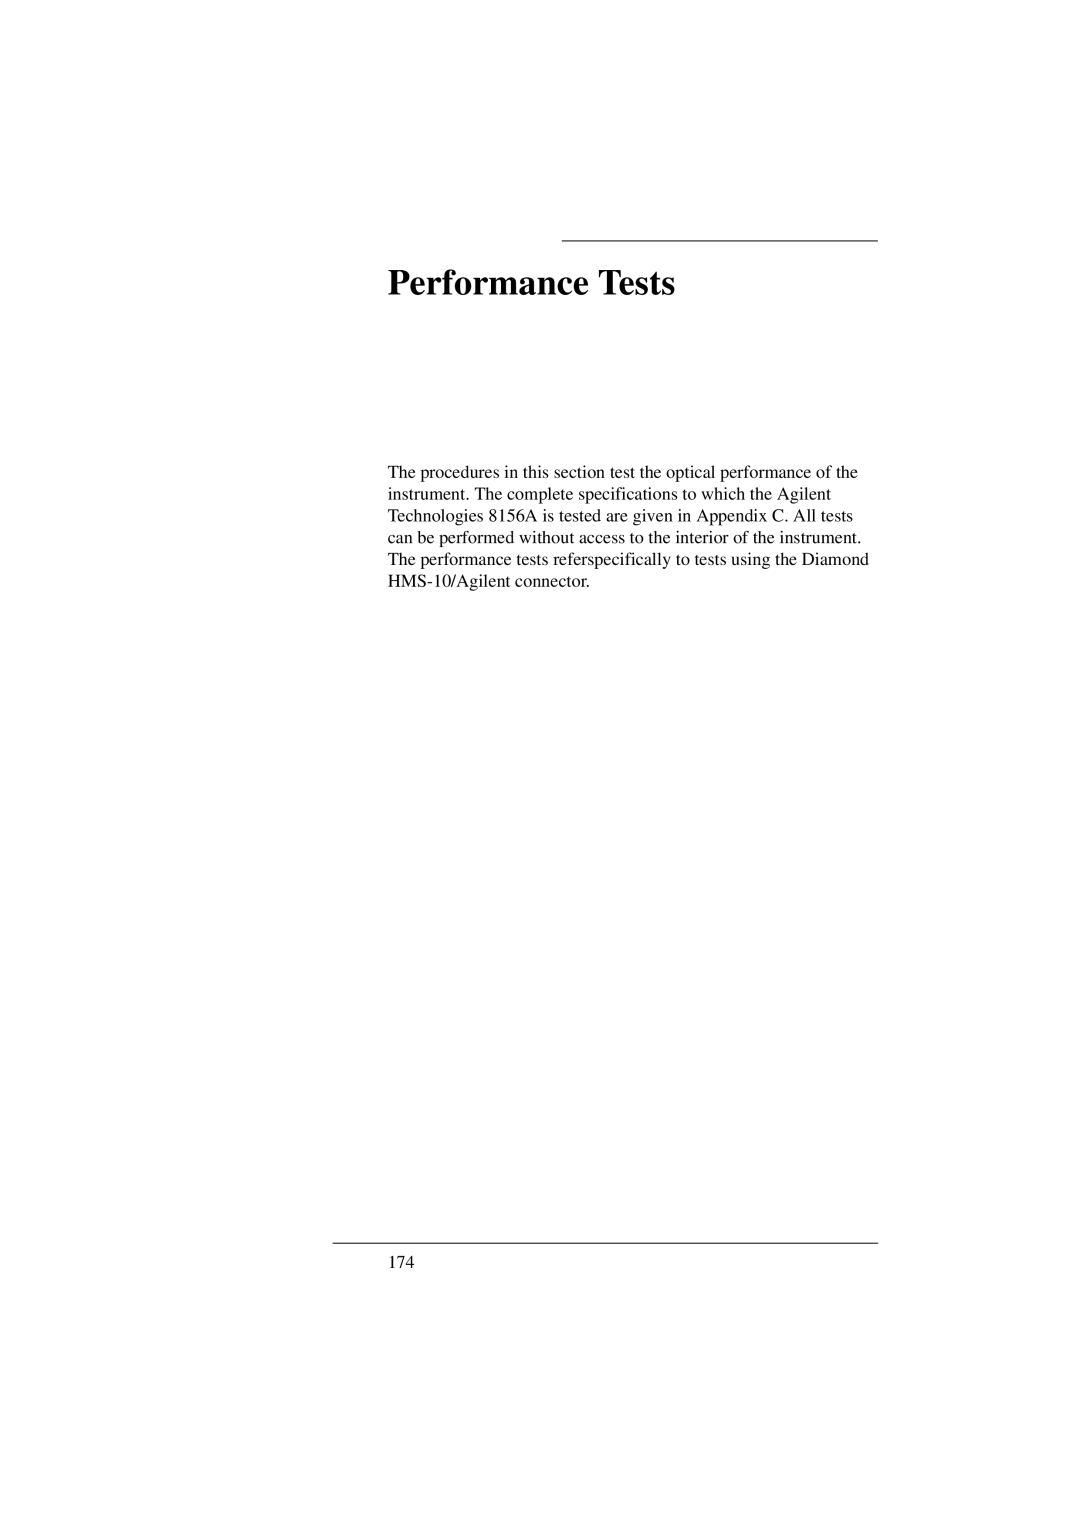 Agilent Technologies 8156A manual Performance Tests 